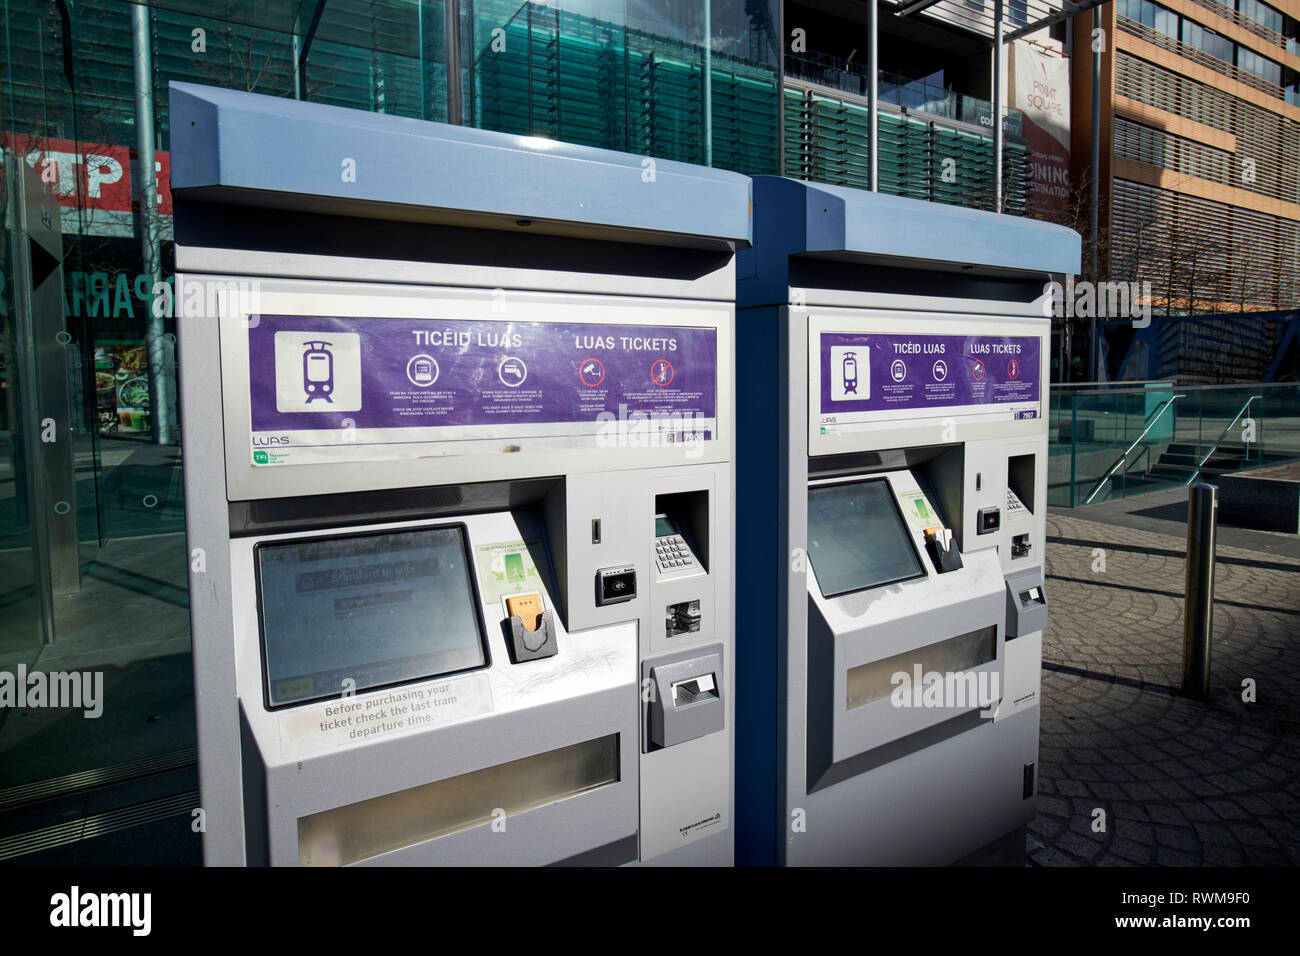 Sistema de tren ligero Luas dublins máquinas automáticas de billetes Dublín, República de Irlanda Foto de stock